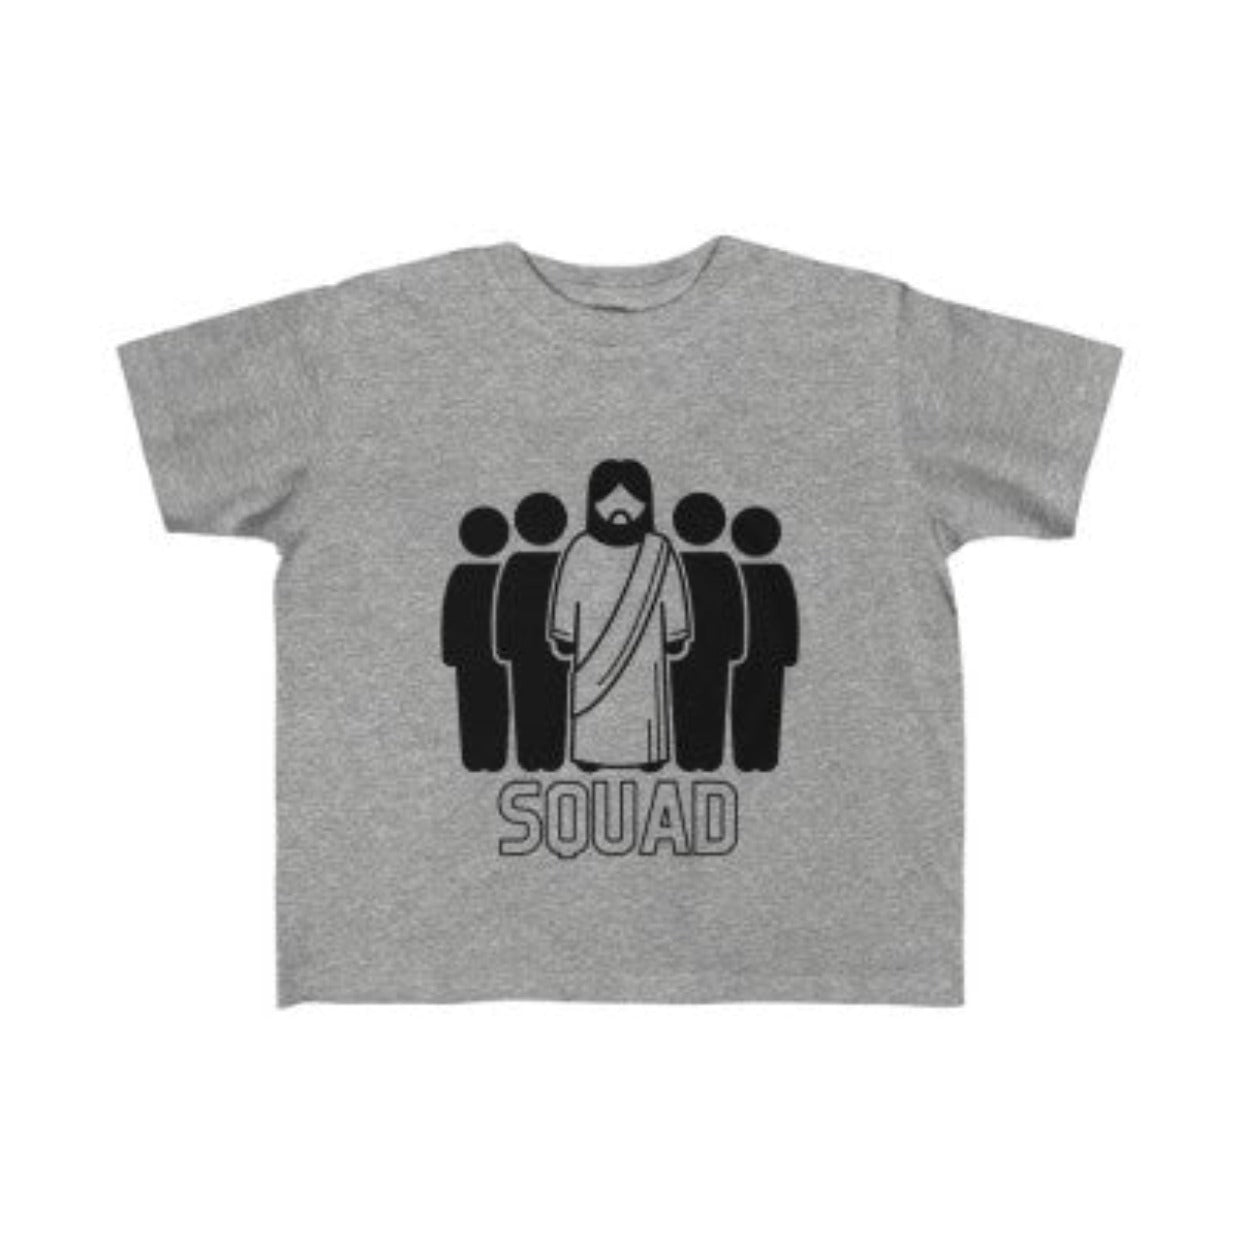 Squad - Kid's Tee 2T-6T | LifeSpring Shirts - LifeSpring Shirts